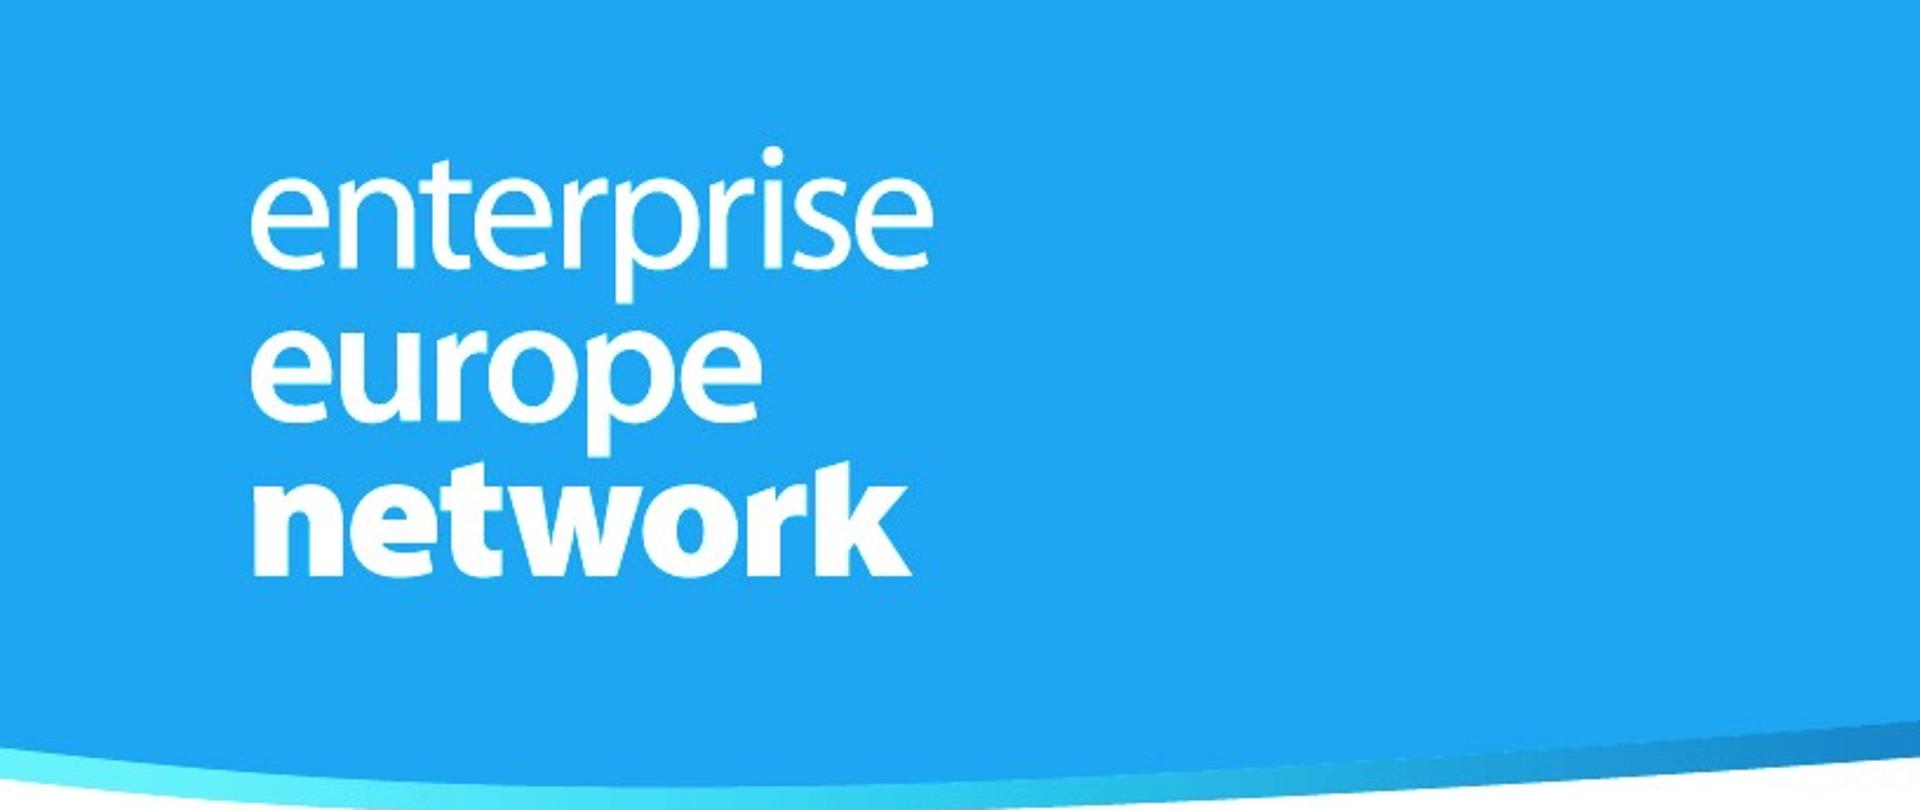 Na niebieski tle napis: Entrerprise Europe Network